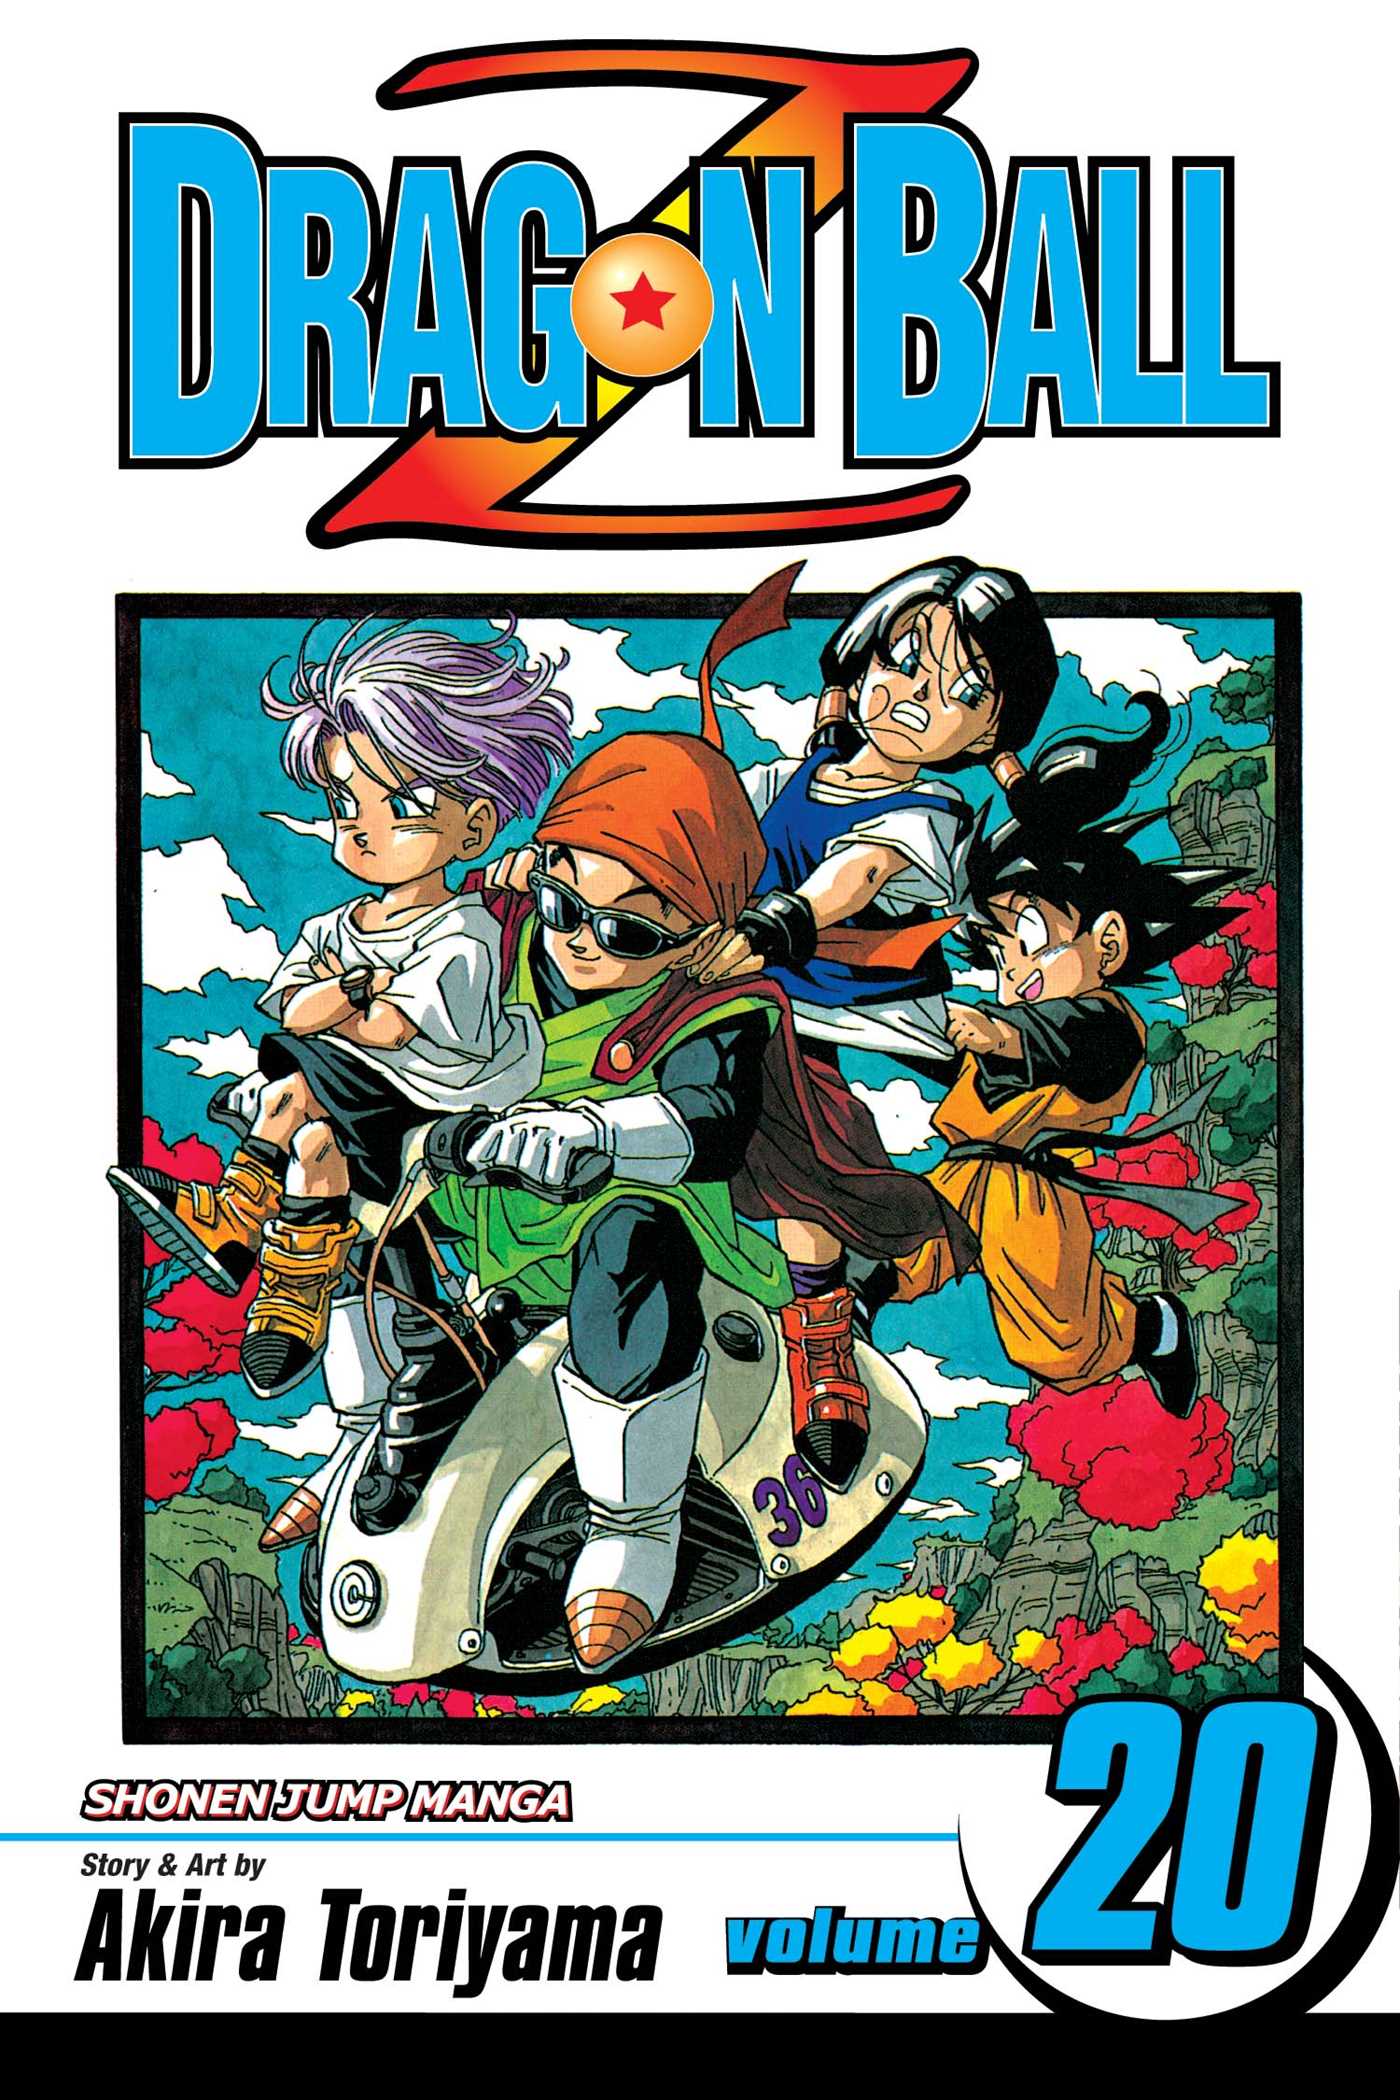 List Of Dragon Ball Manga Chapters Dragon Ball Wiki Fandom